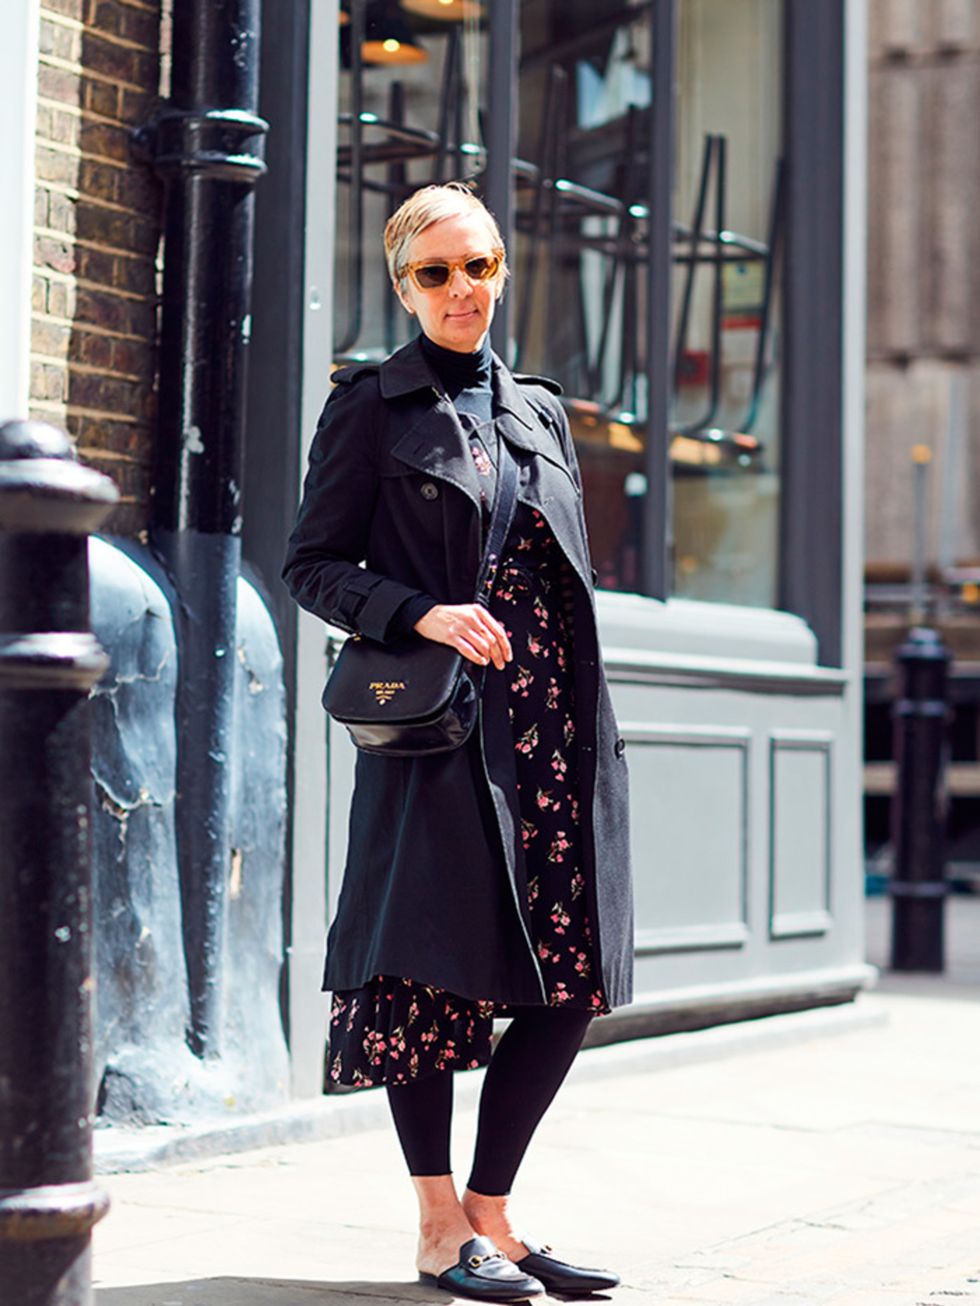 <p>Anne-Marie Curtis, Fashion Director</p>

<p>Saint Laurent coat, Prada dress, Wolford tights, Céline sunglasses, Prada bag, Gucci shoes</p>